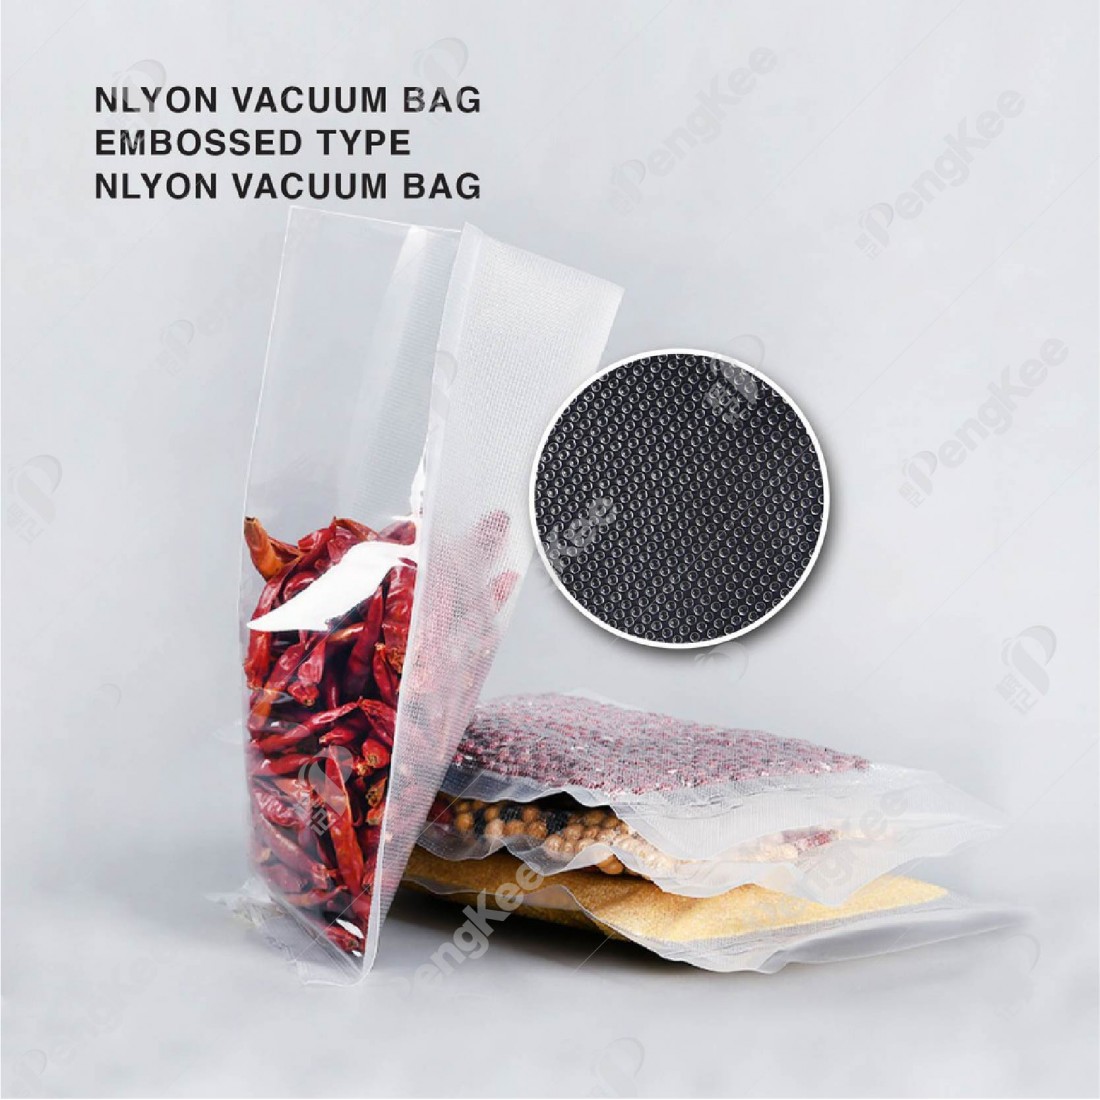 EMBOSSED VACUUM BAG PLASTIC PACKAGING BAG